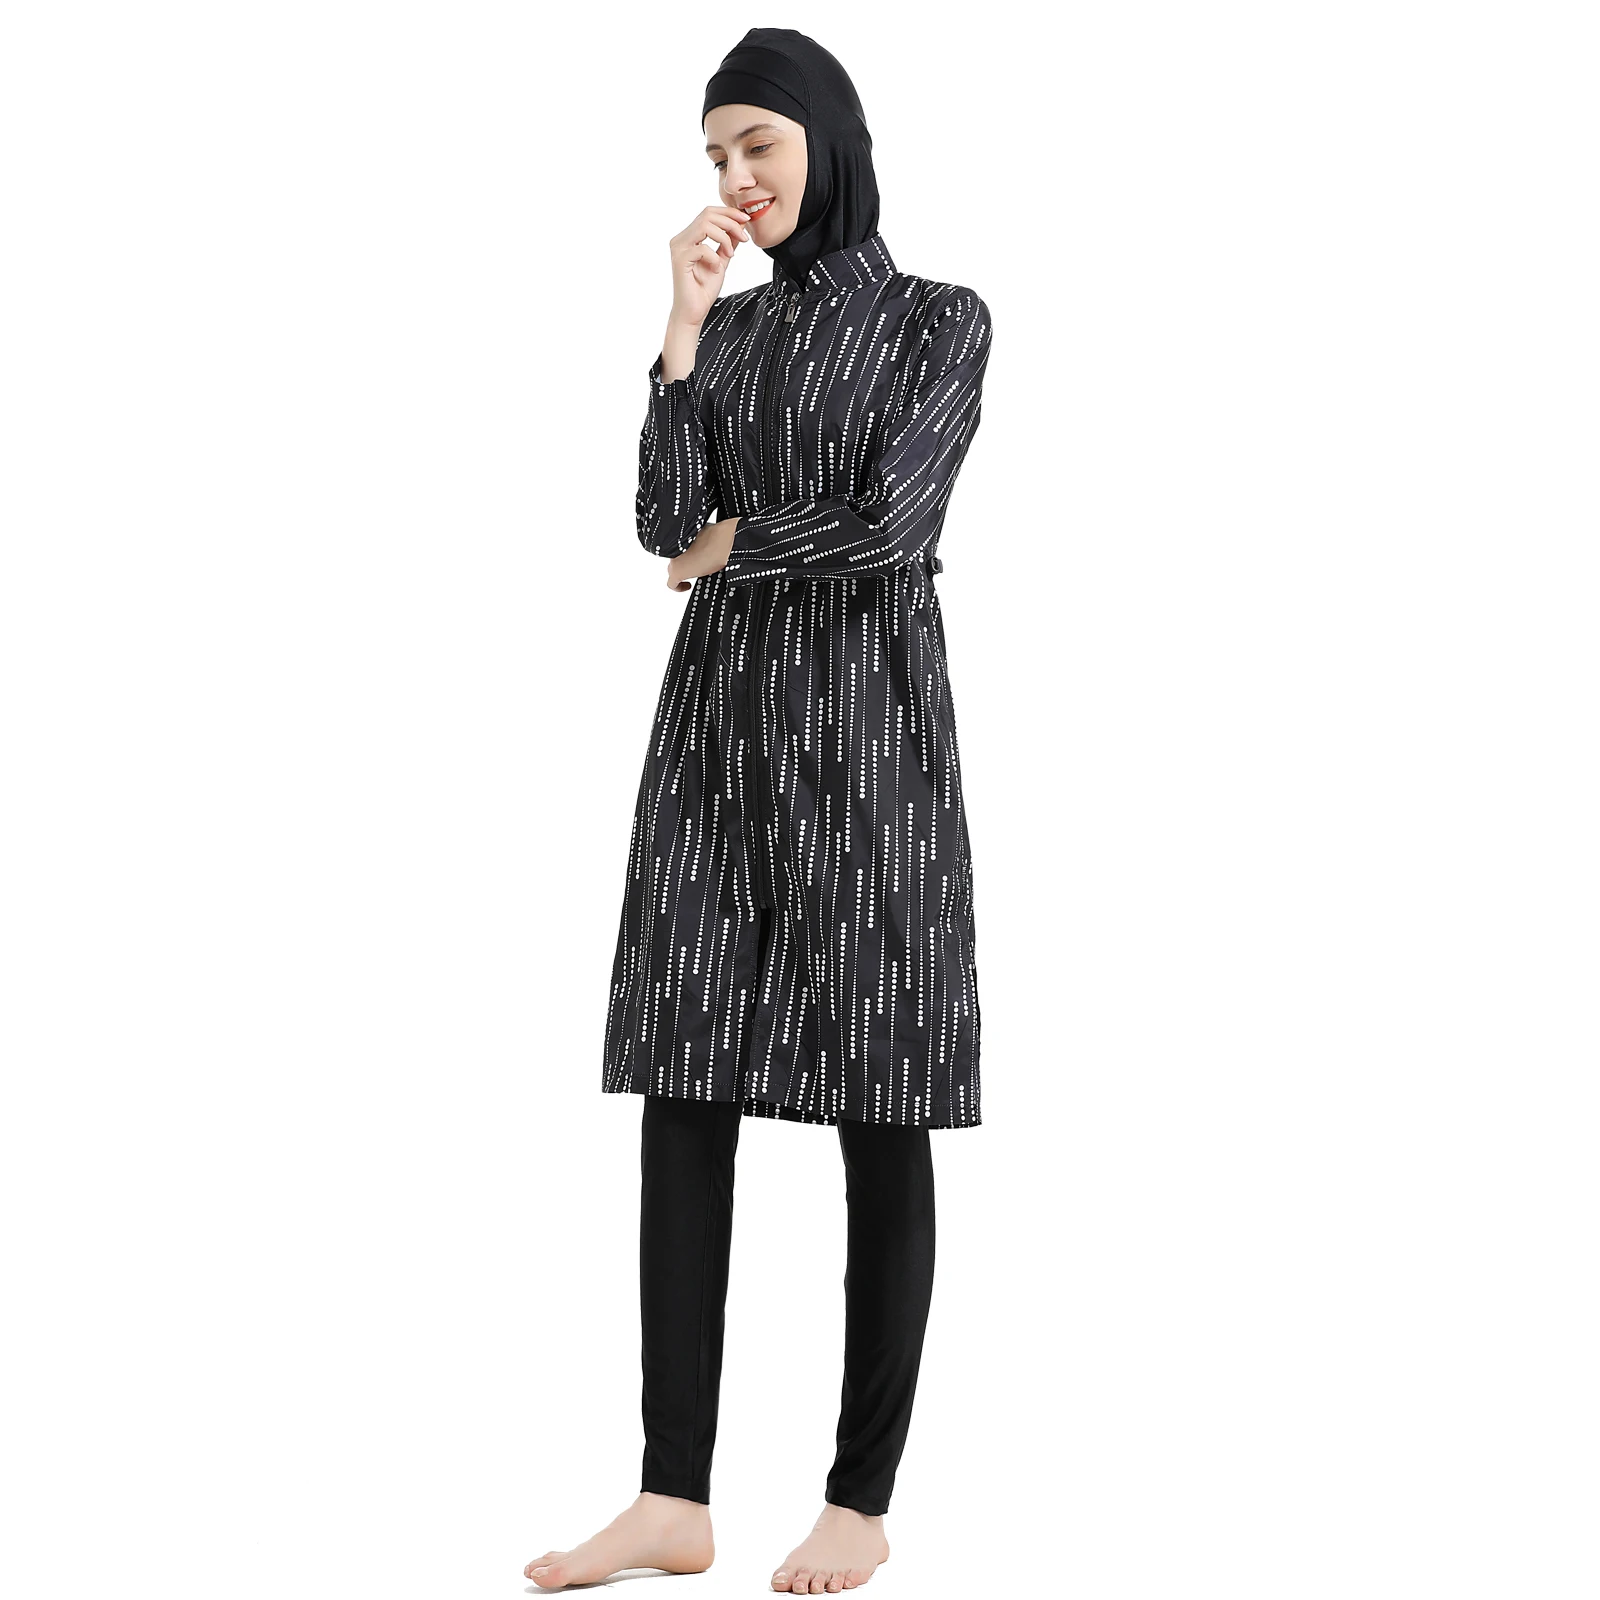 Tive sportswear beachwear bathing set burkini with hijab swimming suit for women modest thumb200